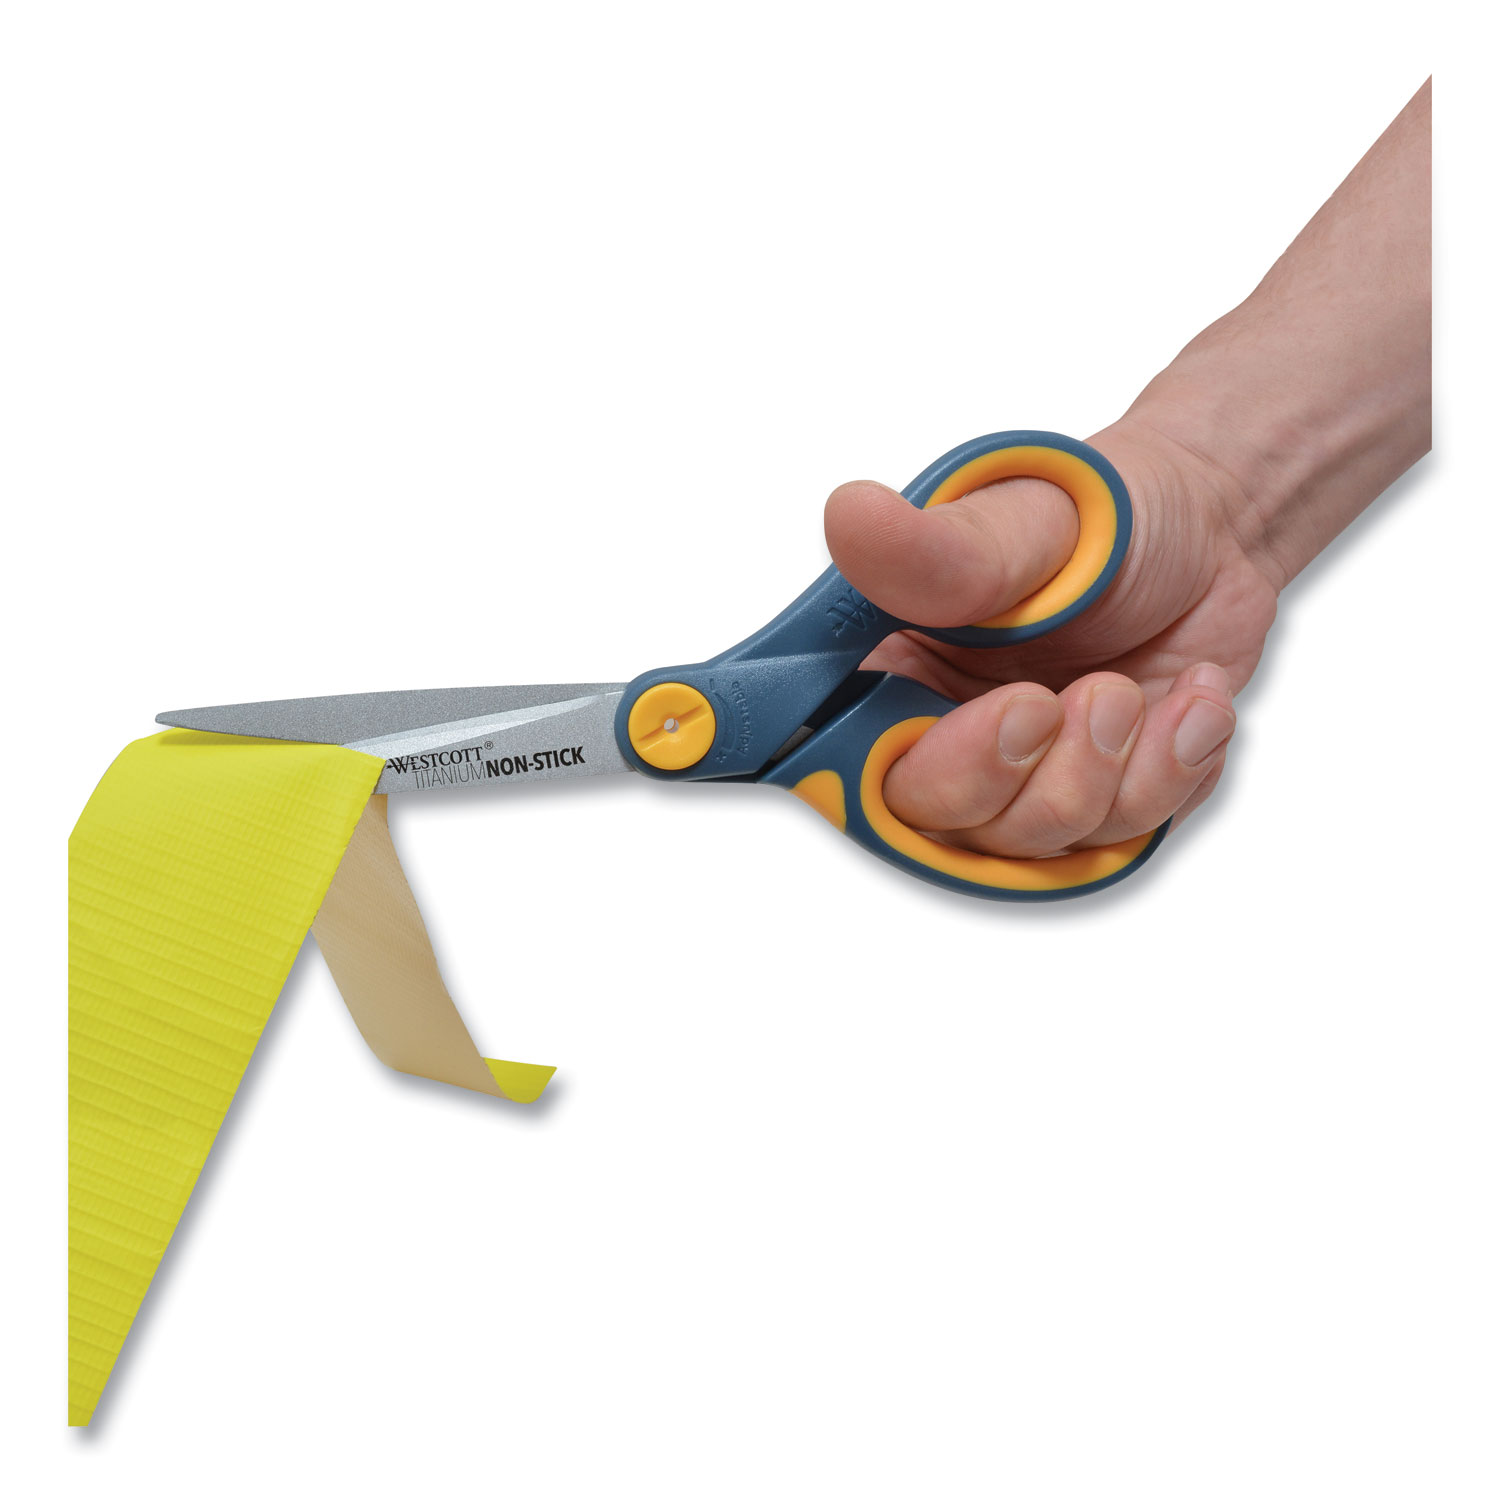 Westcott Value Scissors, 8 inch Straight Handle